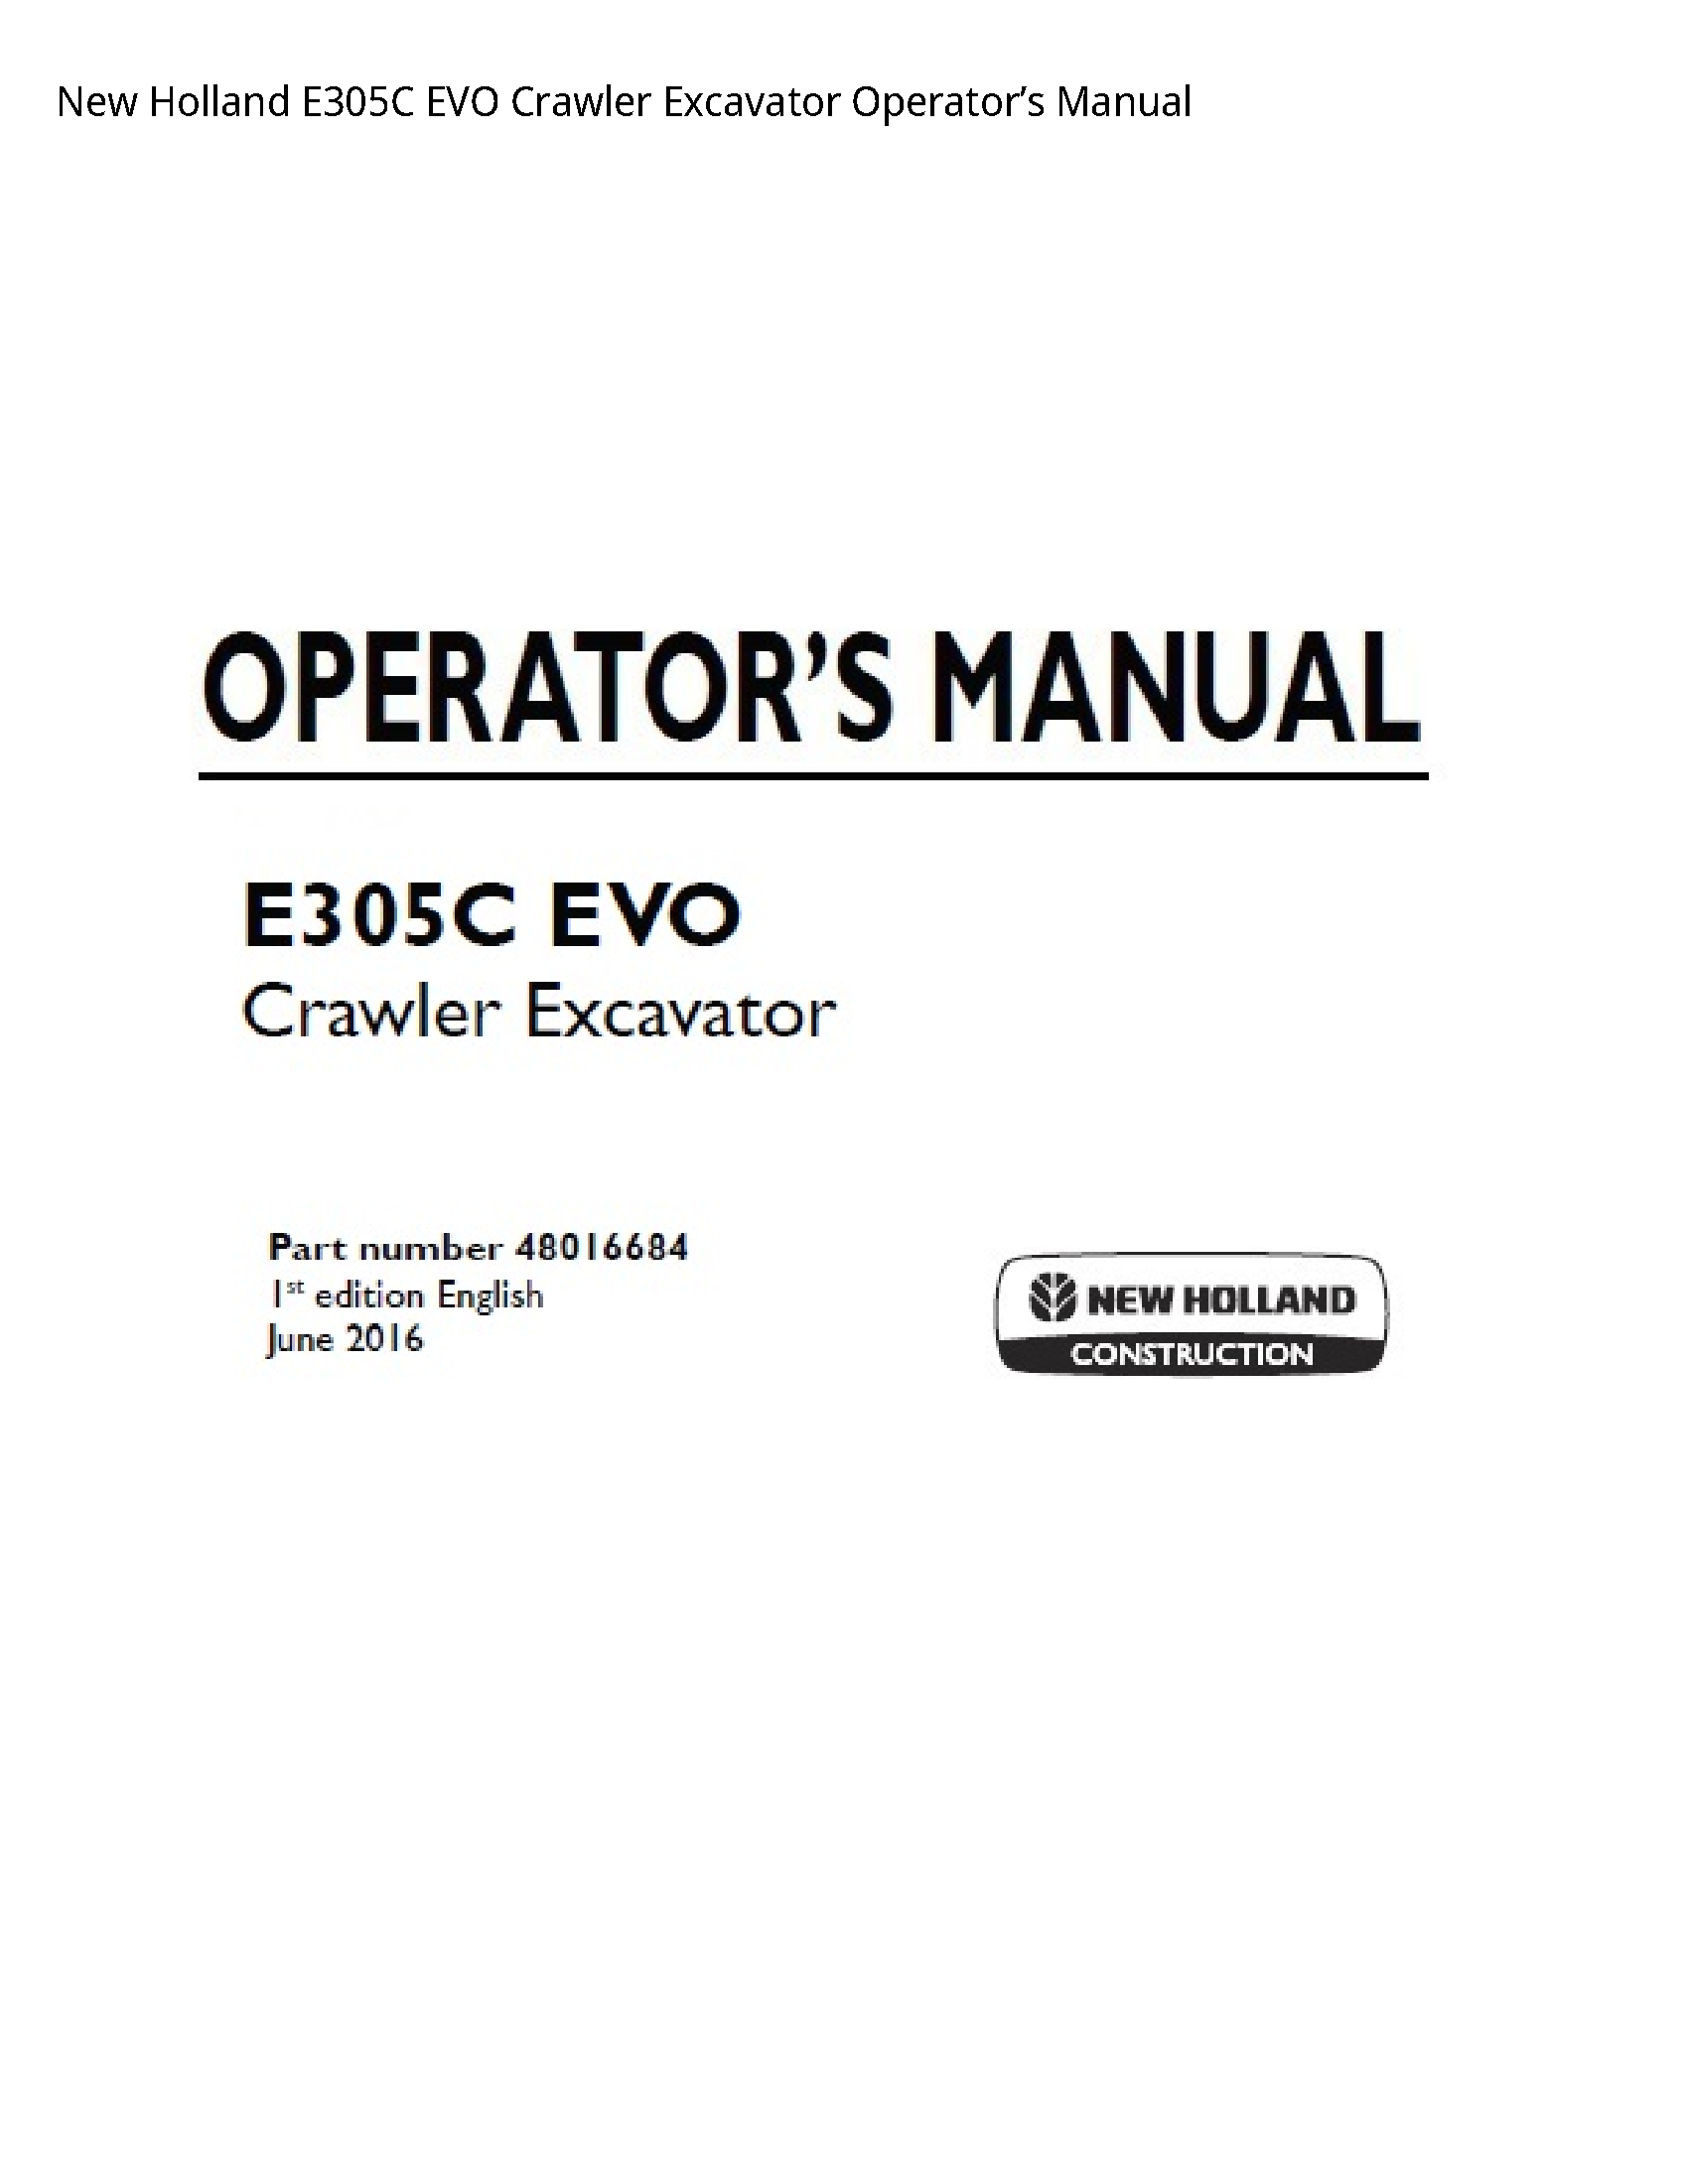 New Holland E305C EVO Crawler Excavator Operator’s manual